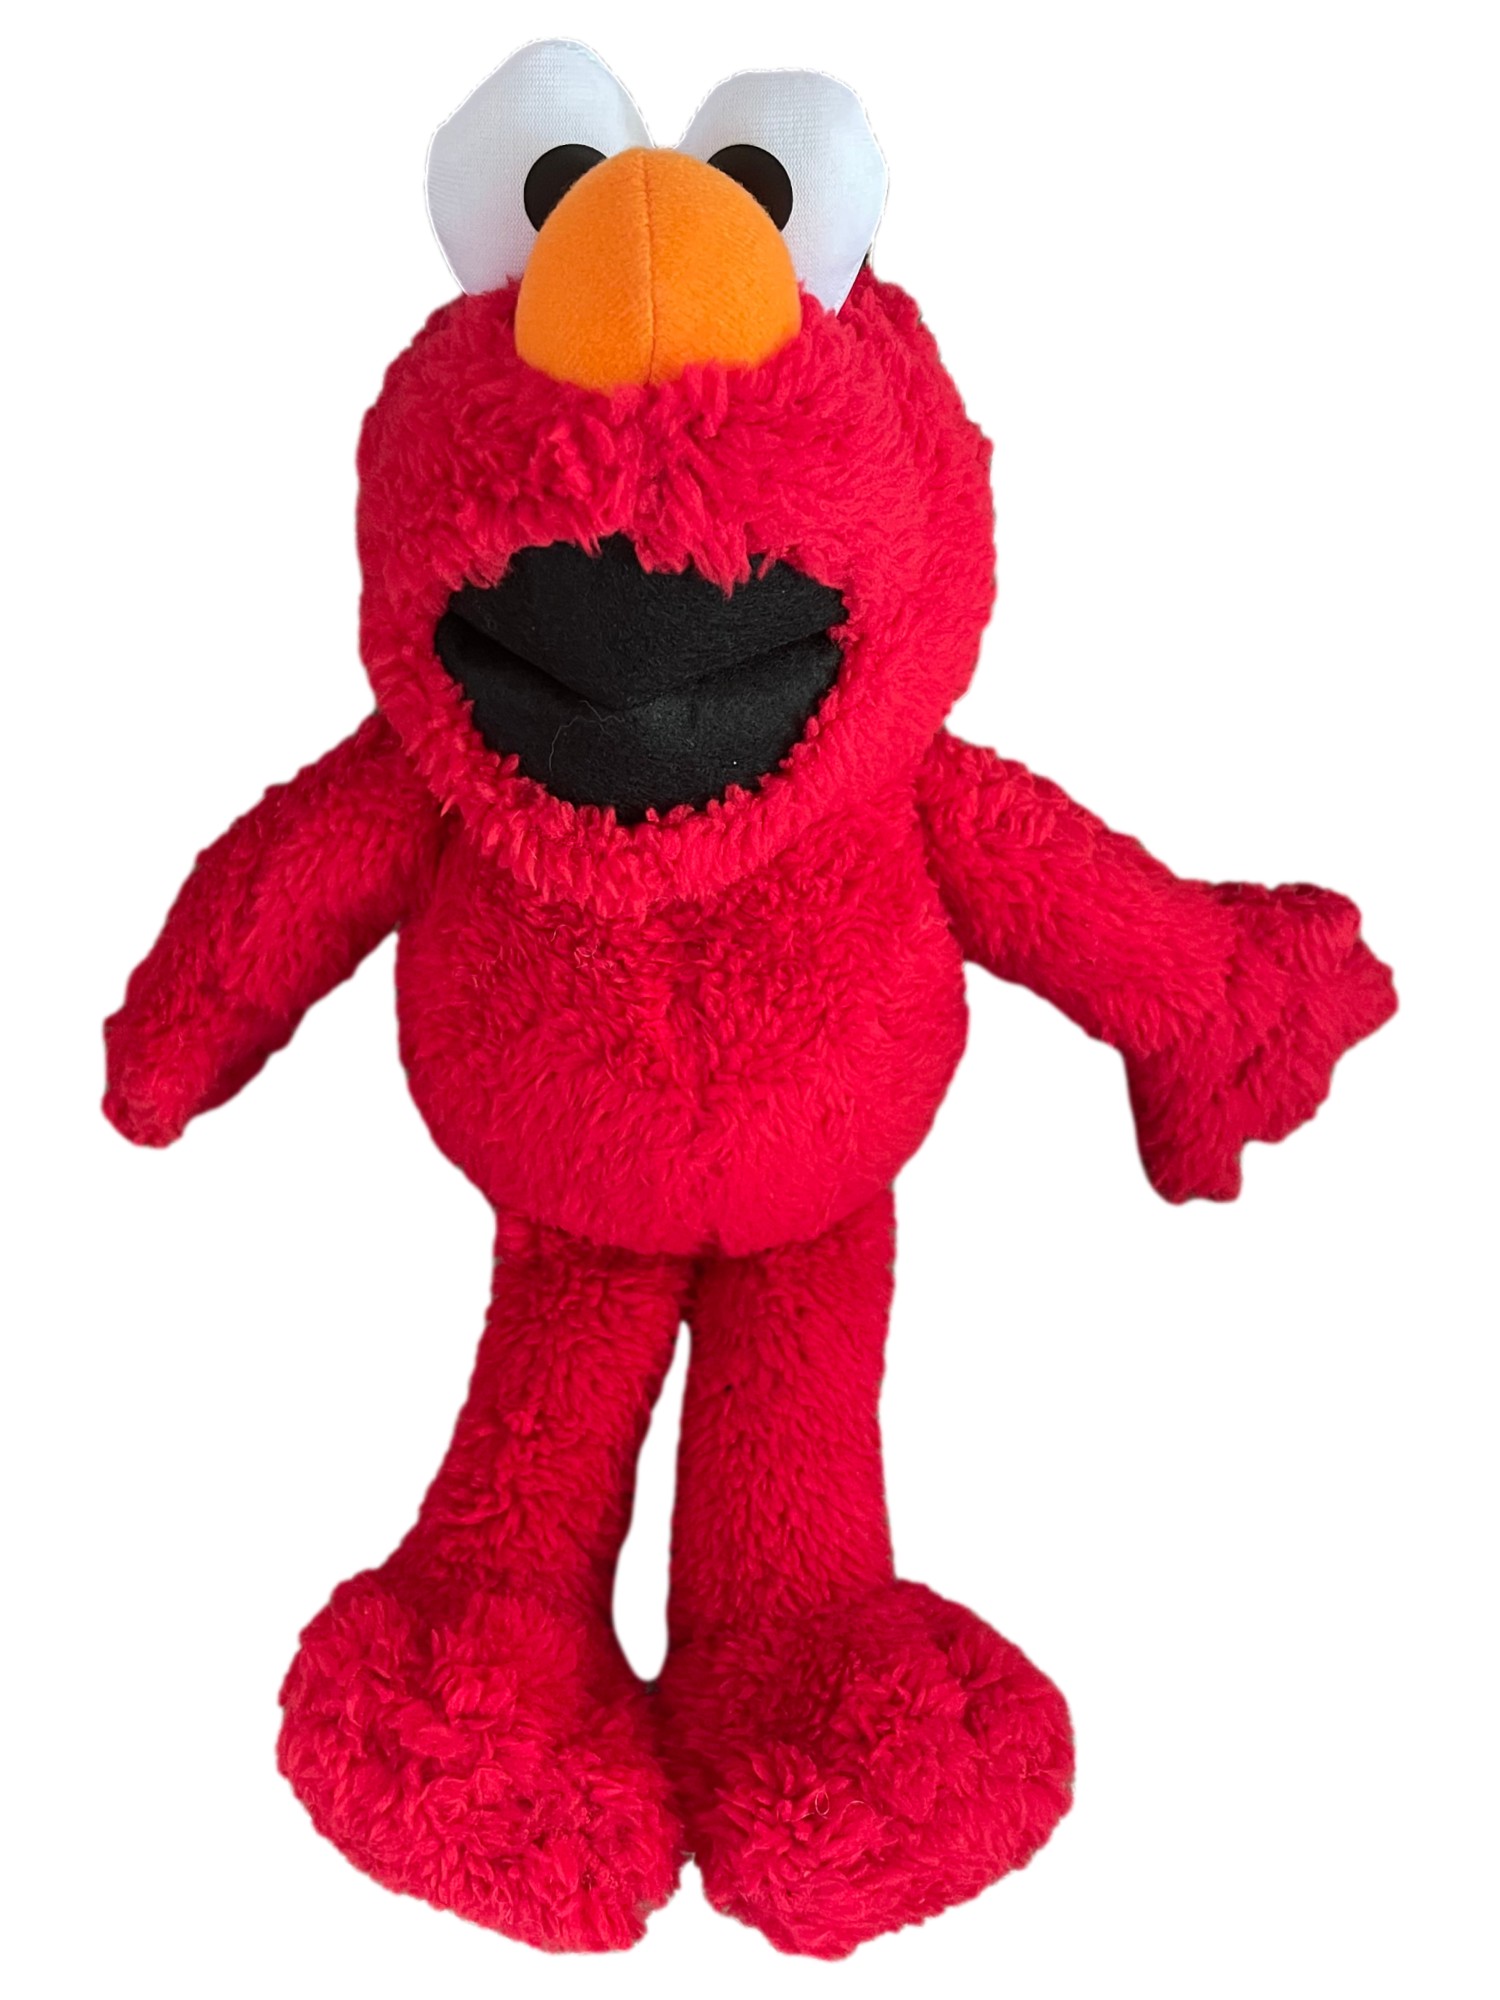 Sesame Street Kohls Cares Sesame Street Elmo Stuffed Animal 14 inch Plush Pal